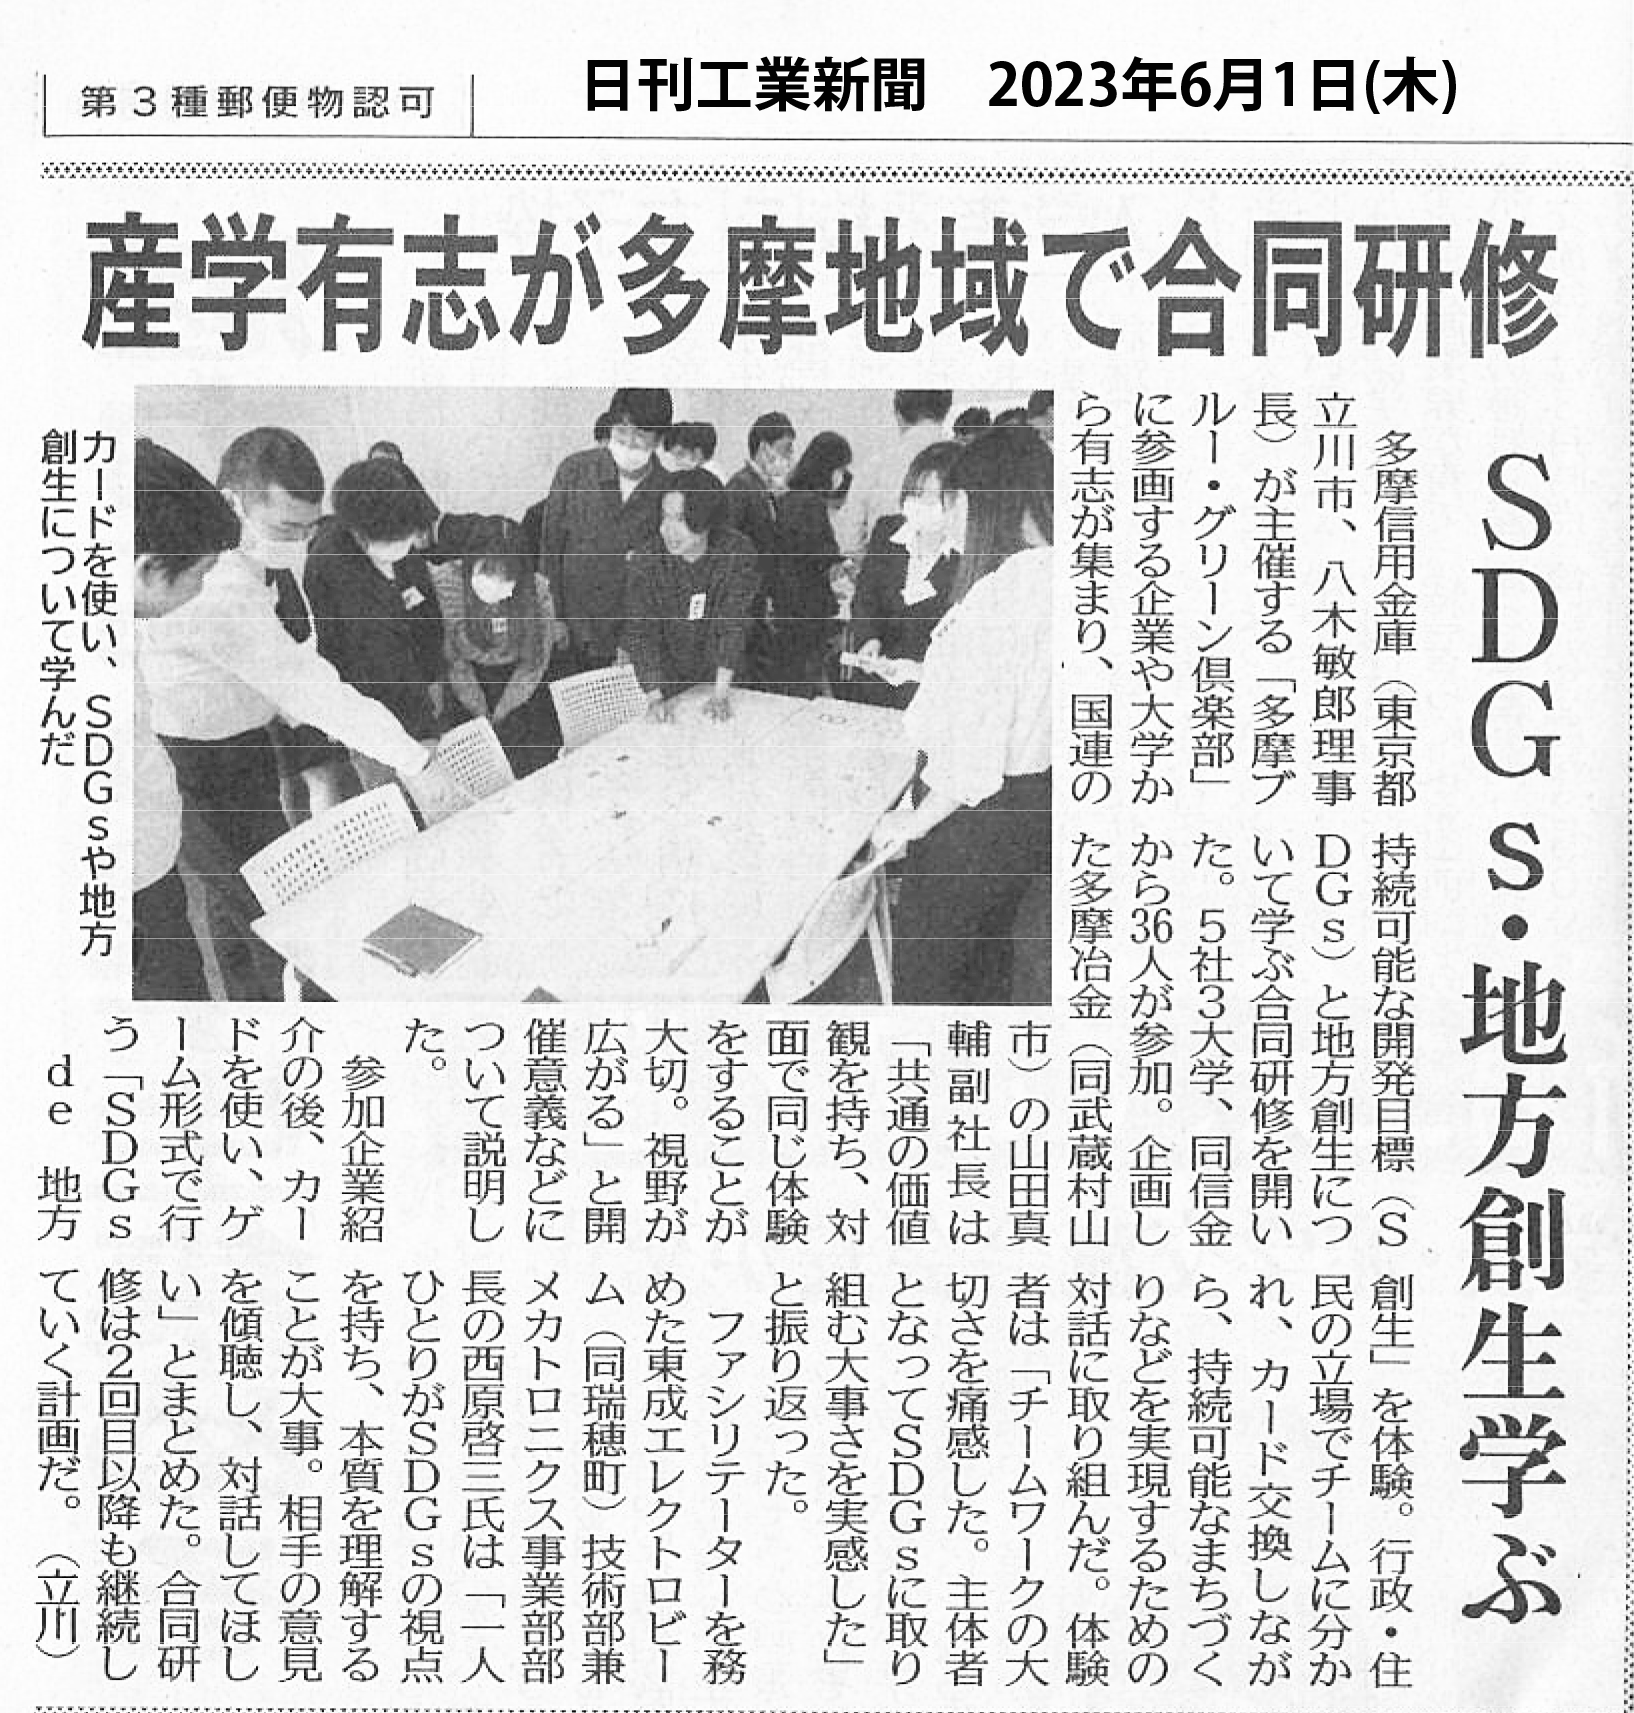 Published in Nikkan Kogyo Shimbun